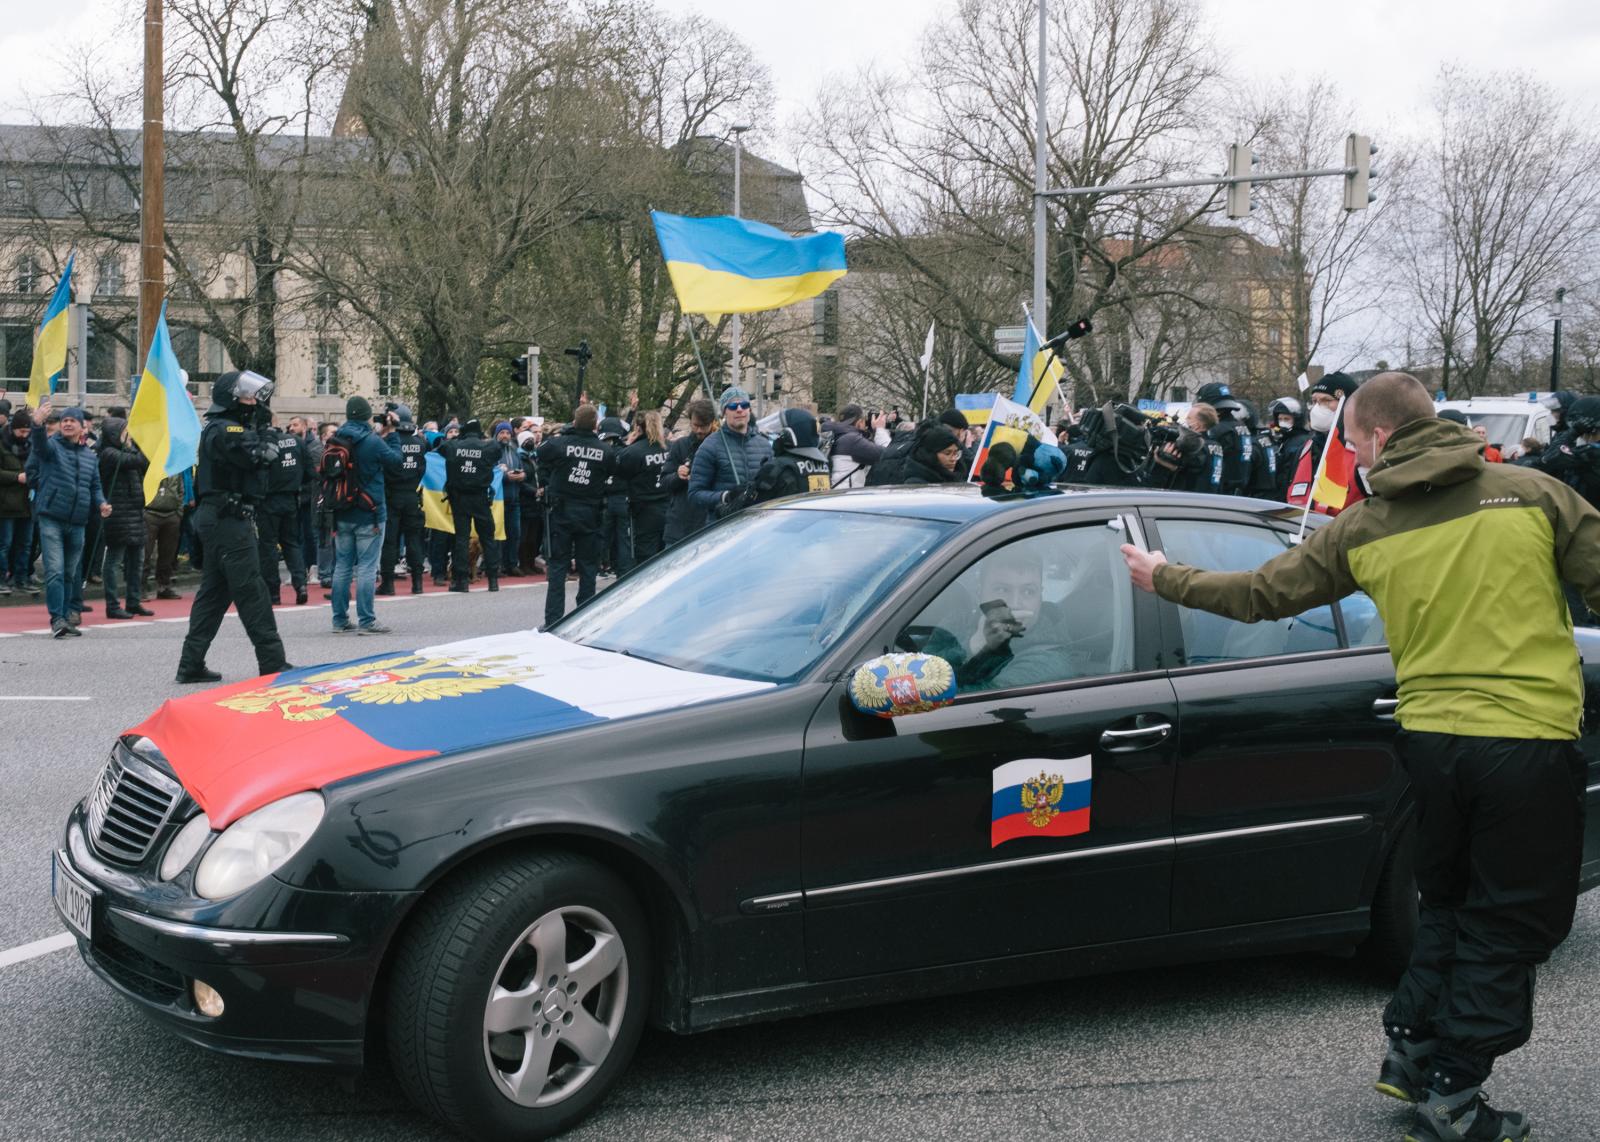 Russian Motorcade in Hanover Blocked - 